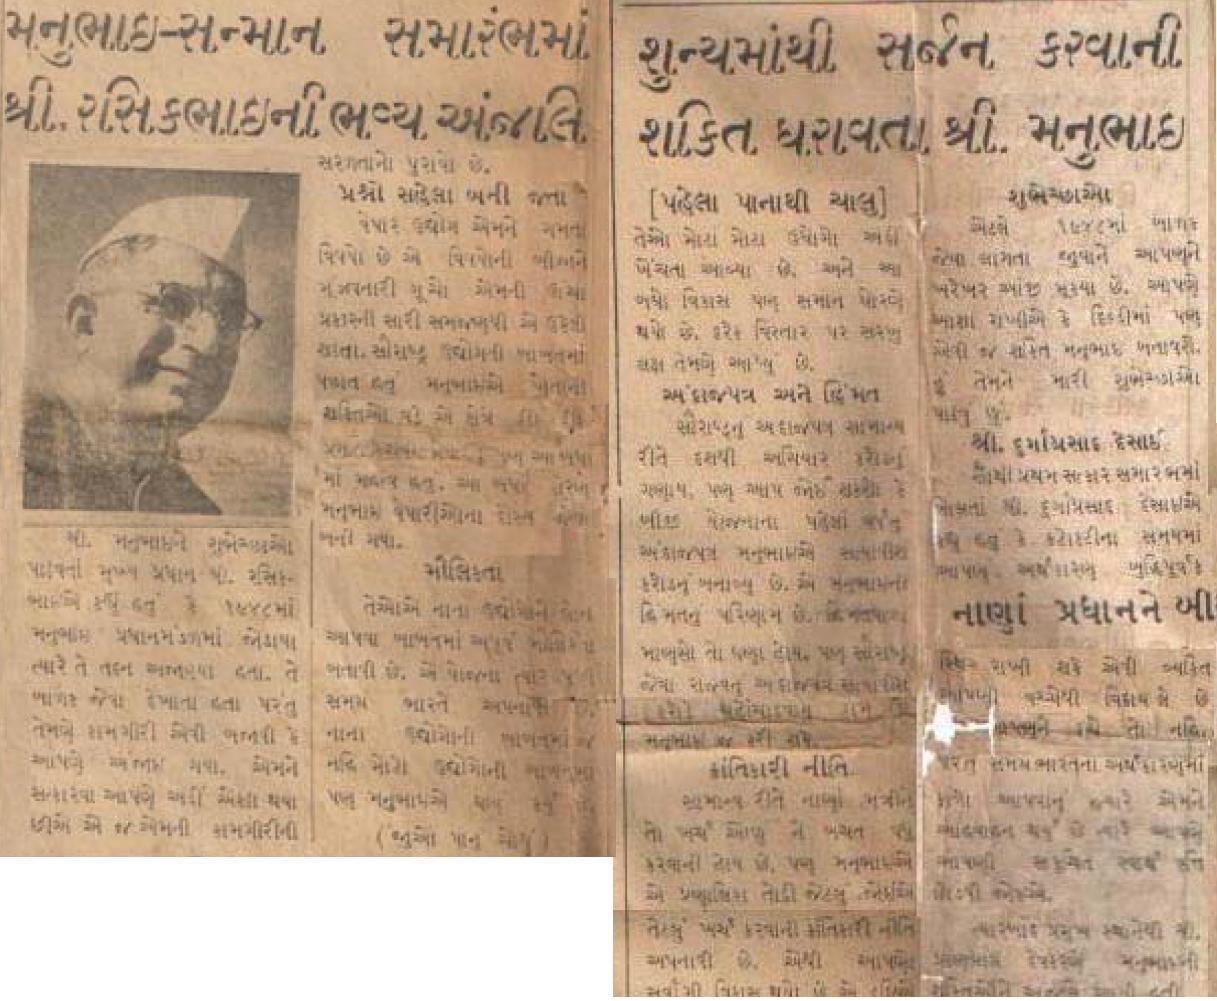 Manubhai honoured by Chief Minister of Saurashtra, April 1956